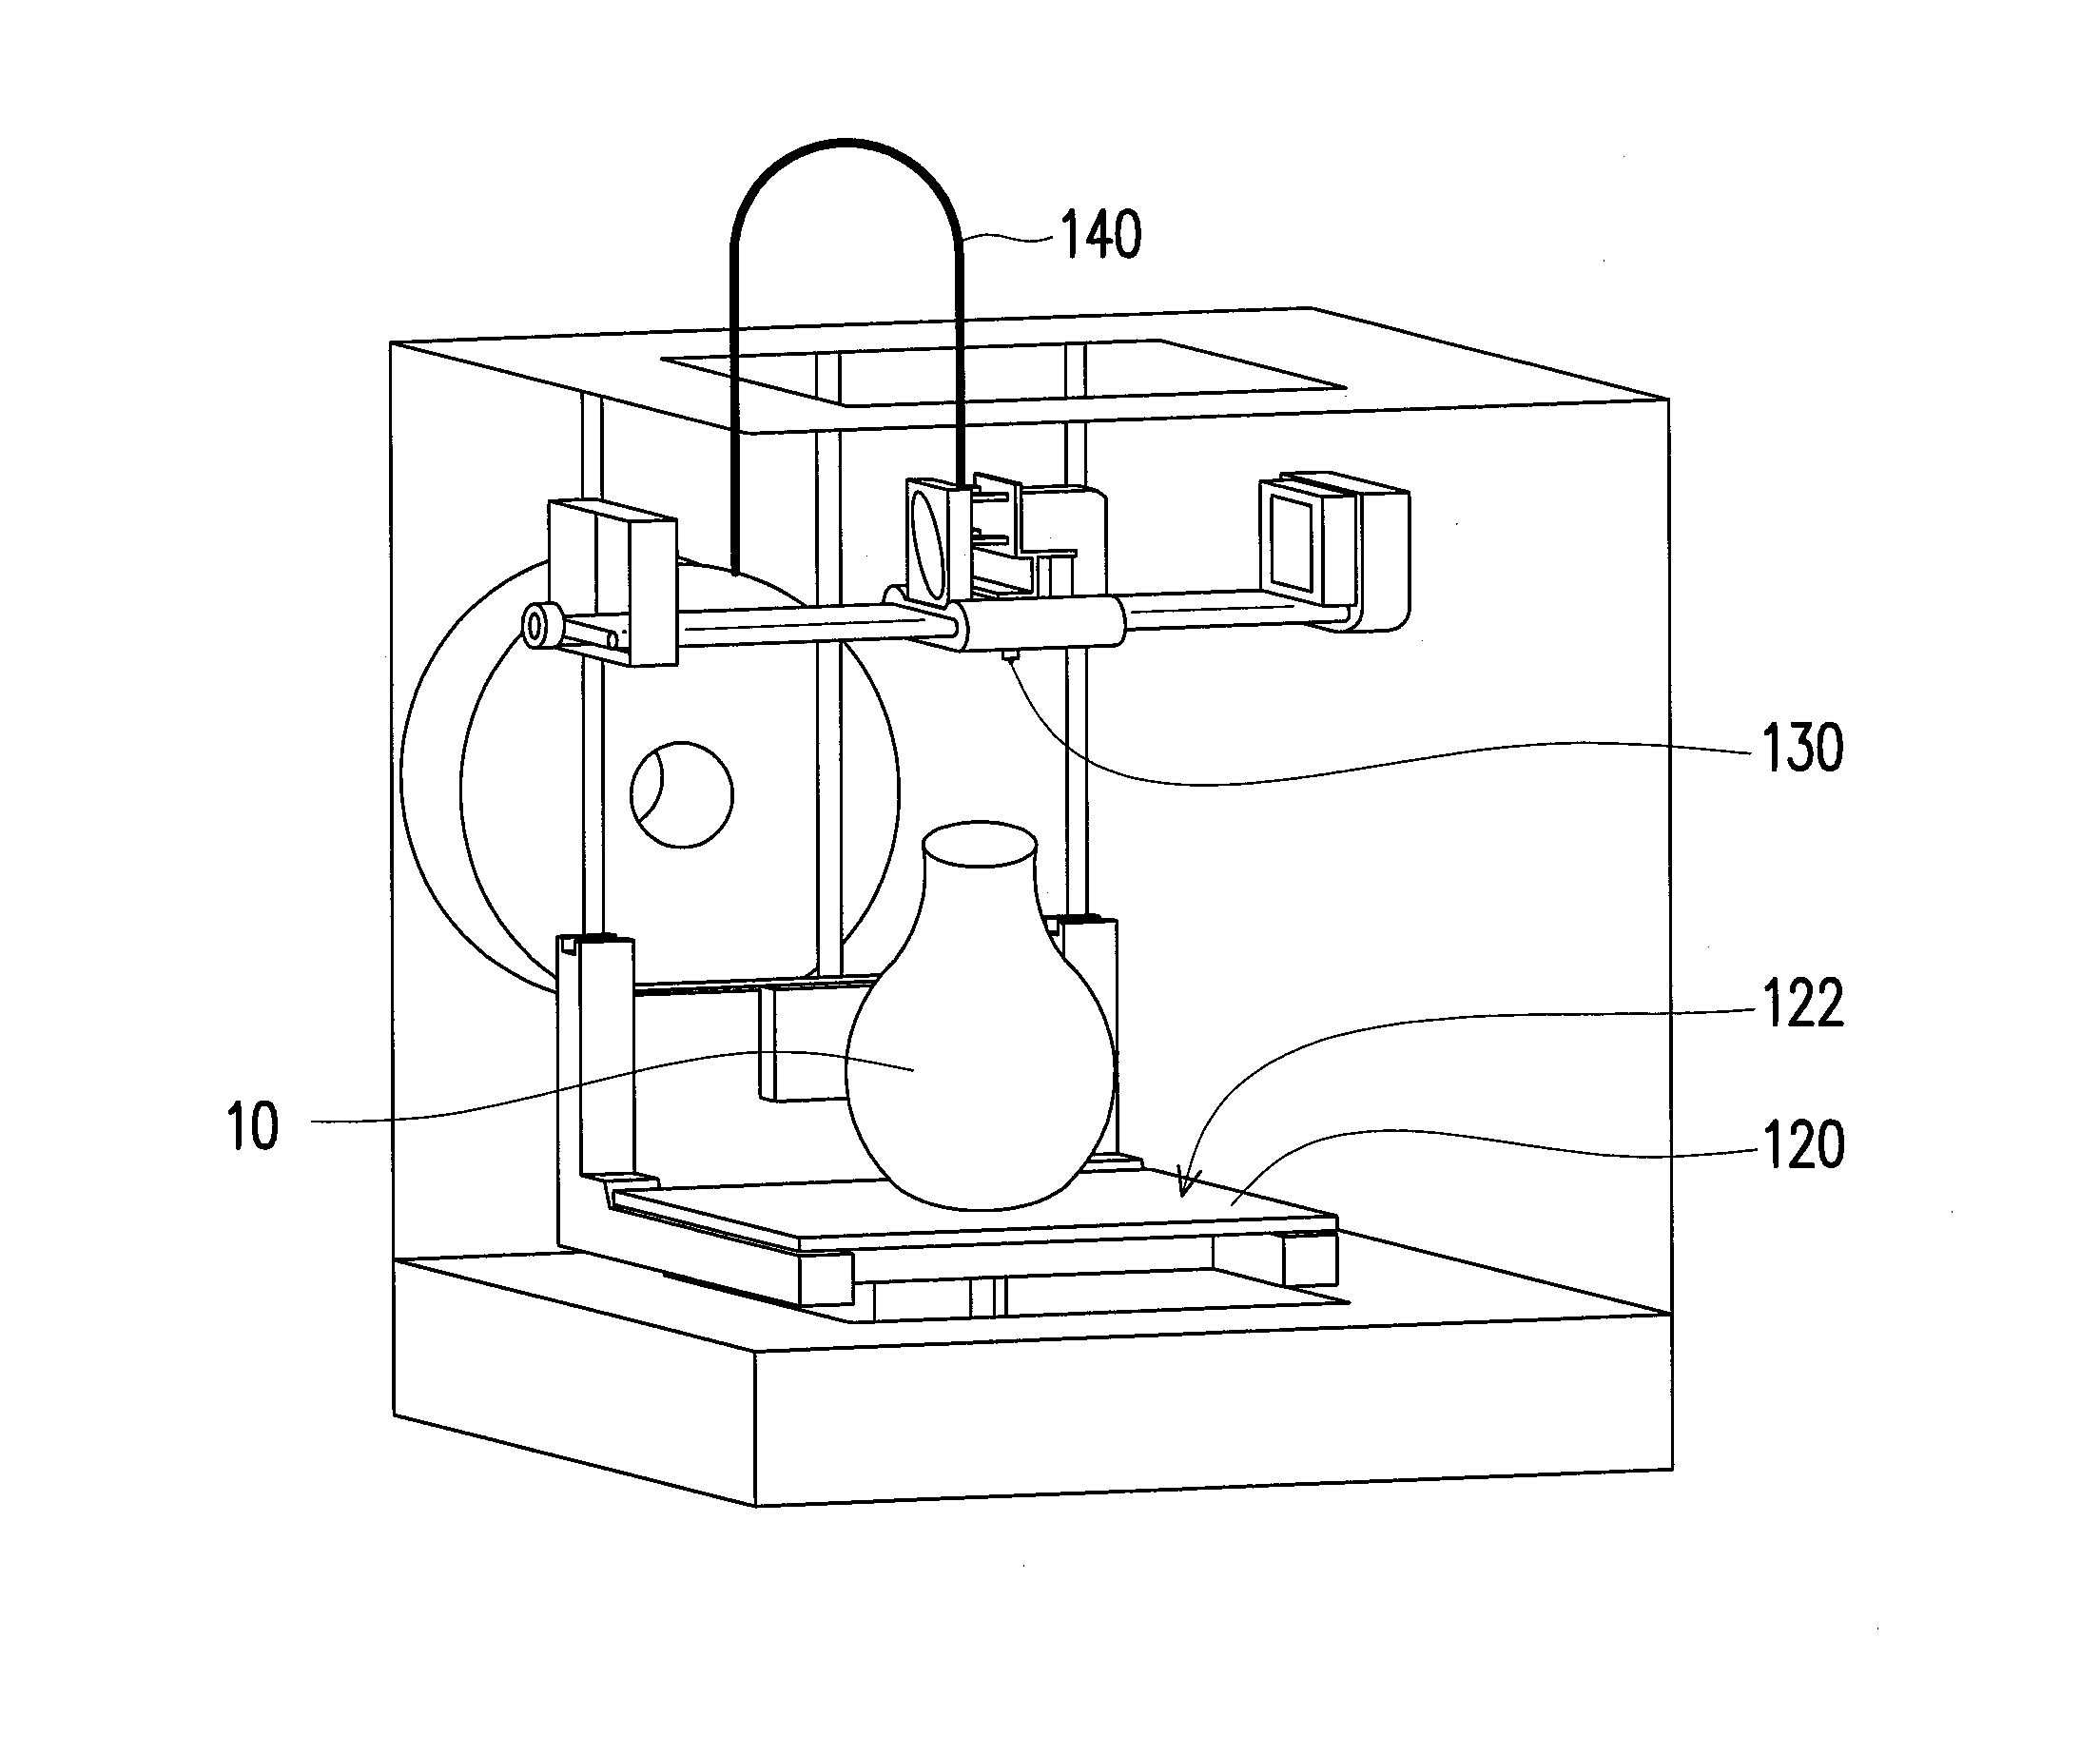 Three-dimensional printing apparatus